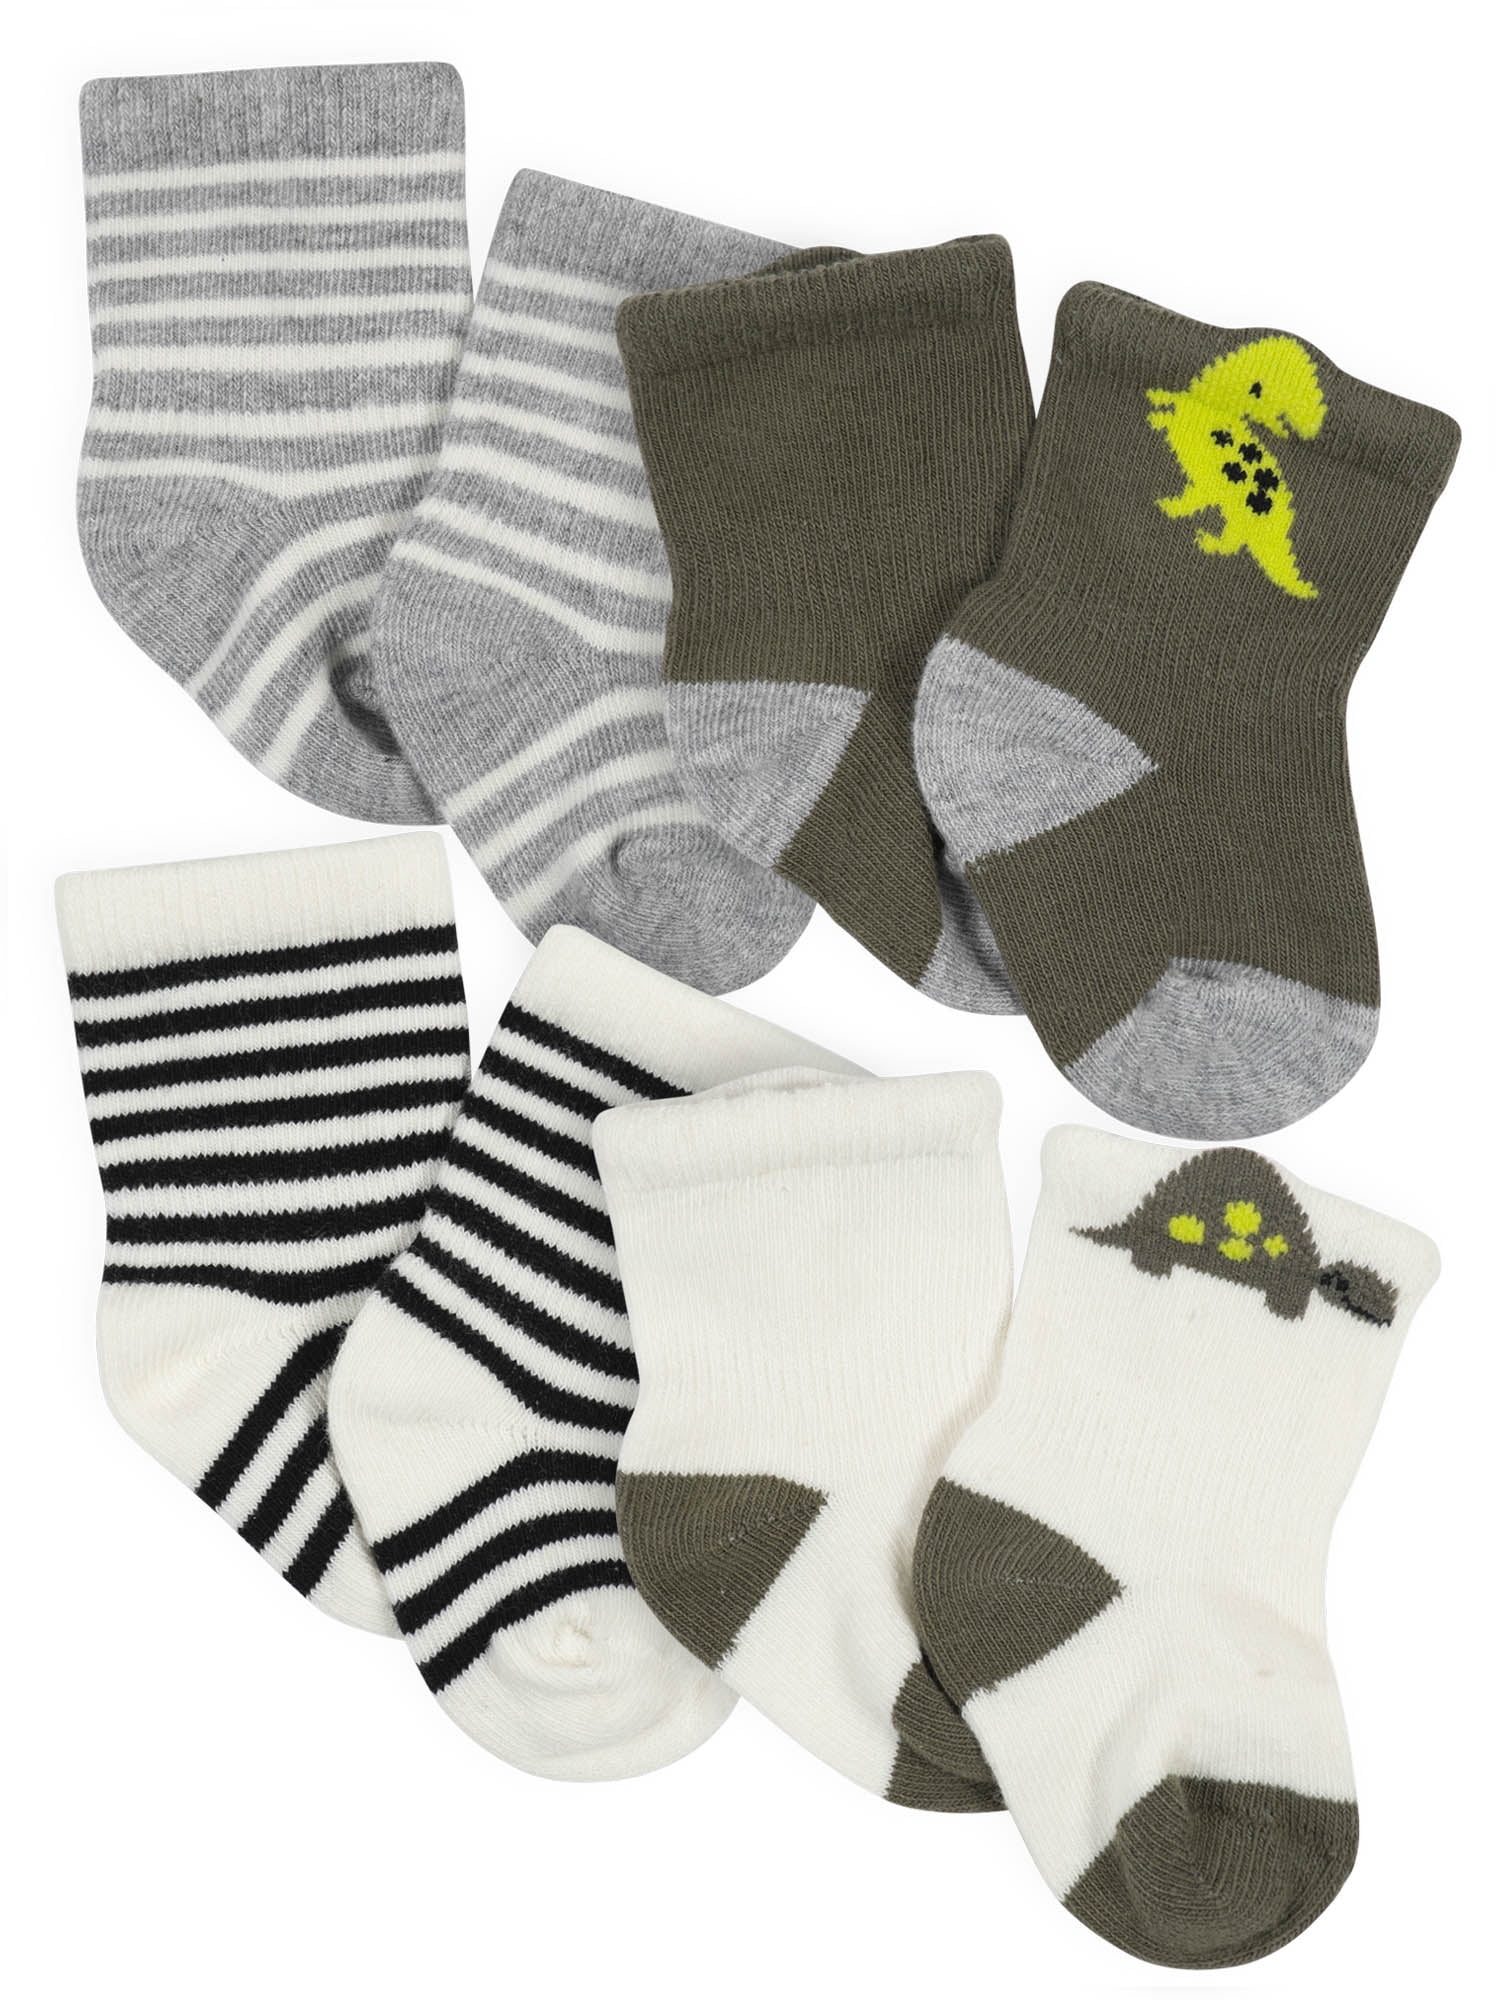 Garanimals Boys Baby Toddler 6 Pair Ankle Socks 0-6 Months Cushion Foot Striped 